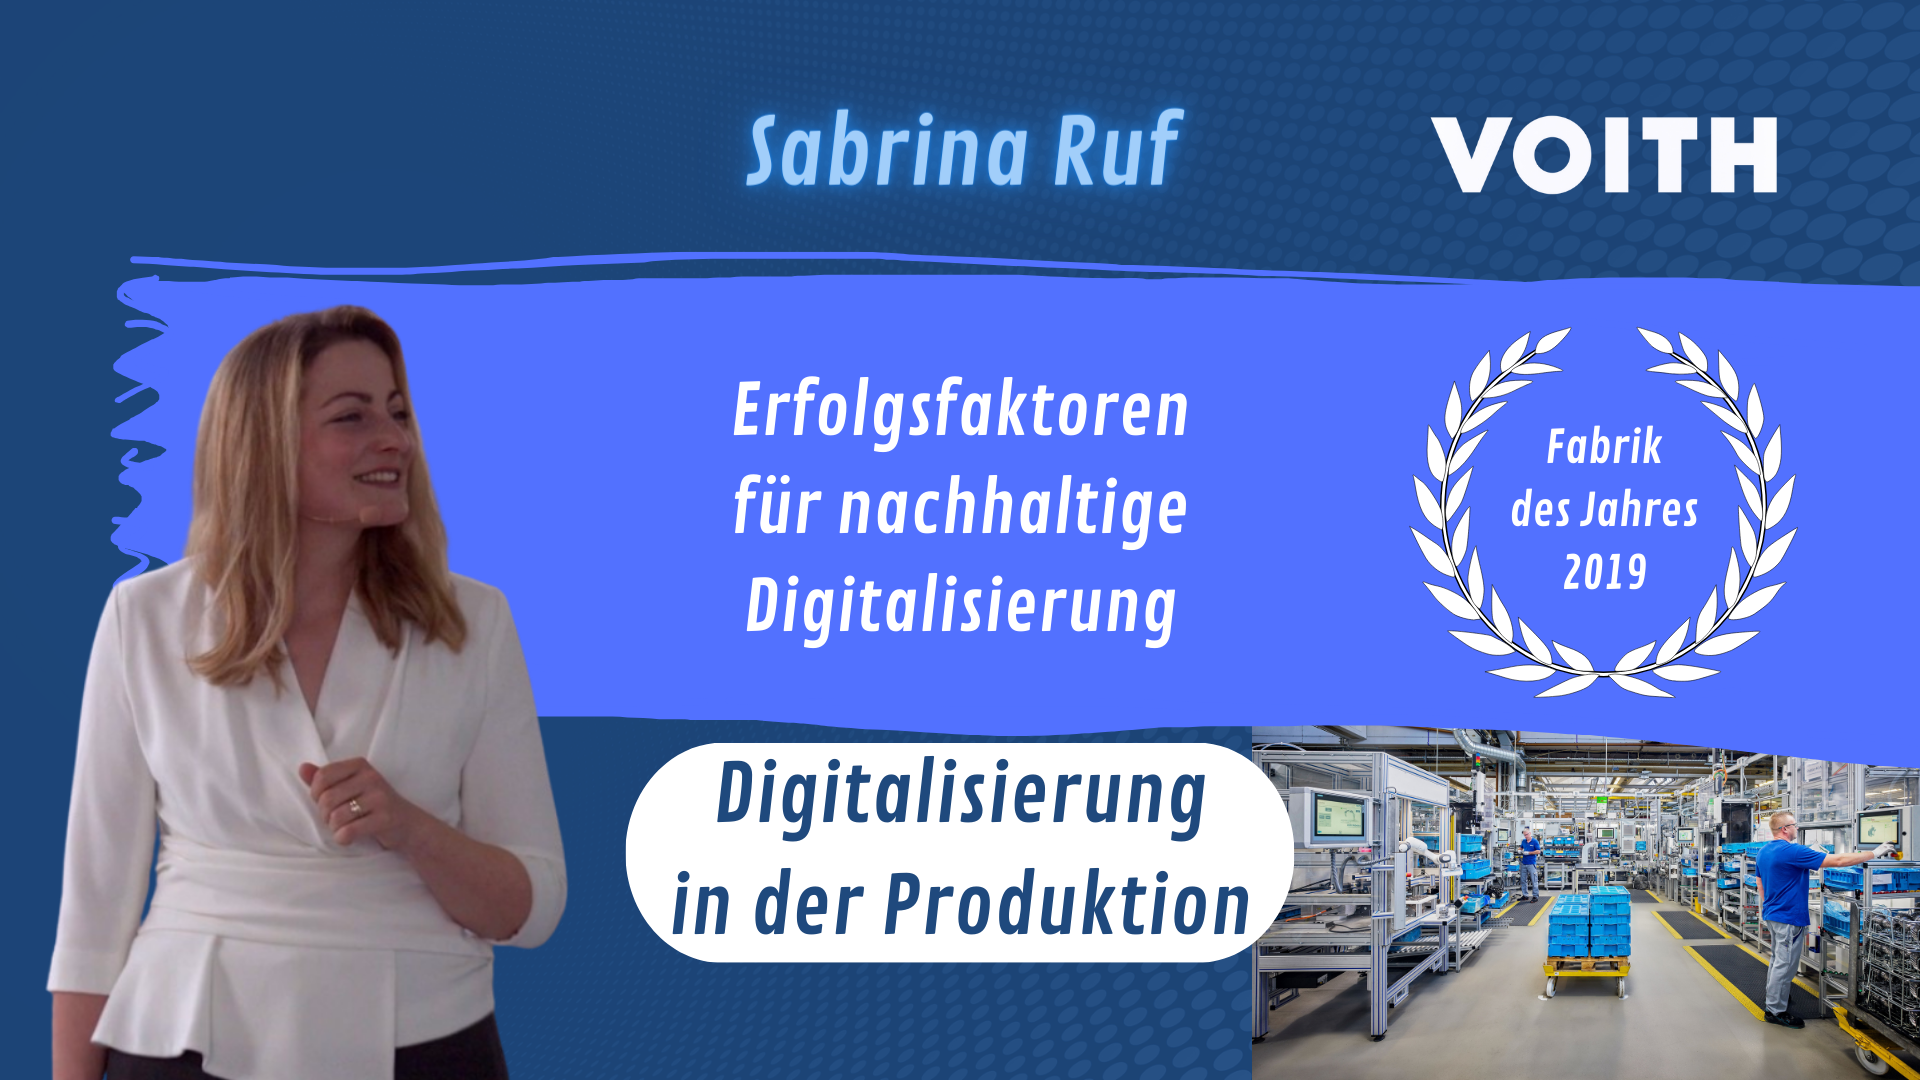 DIGITAL - Digitalization in production with Sabrina Ruf